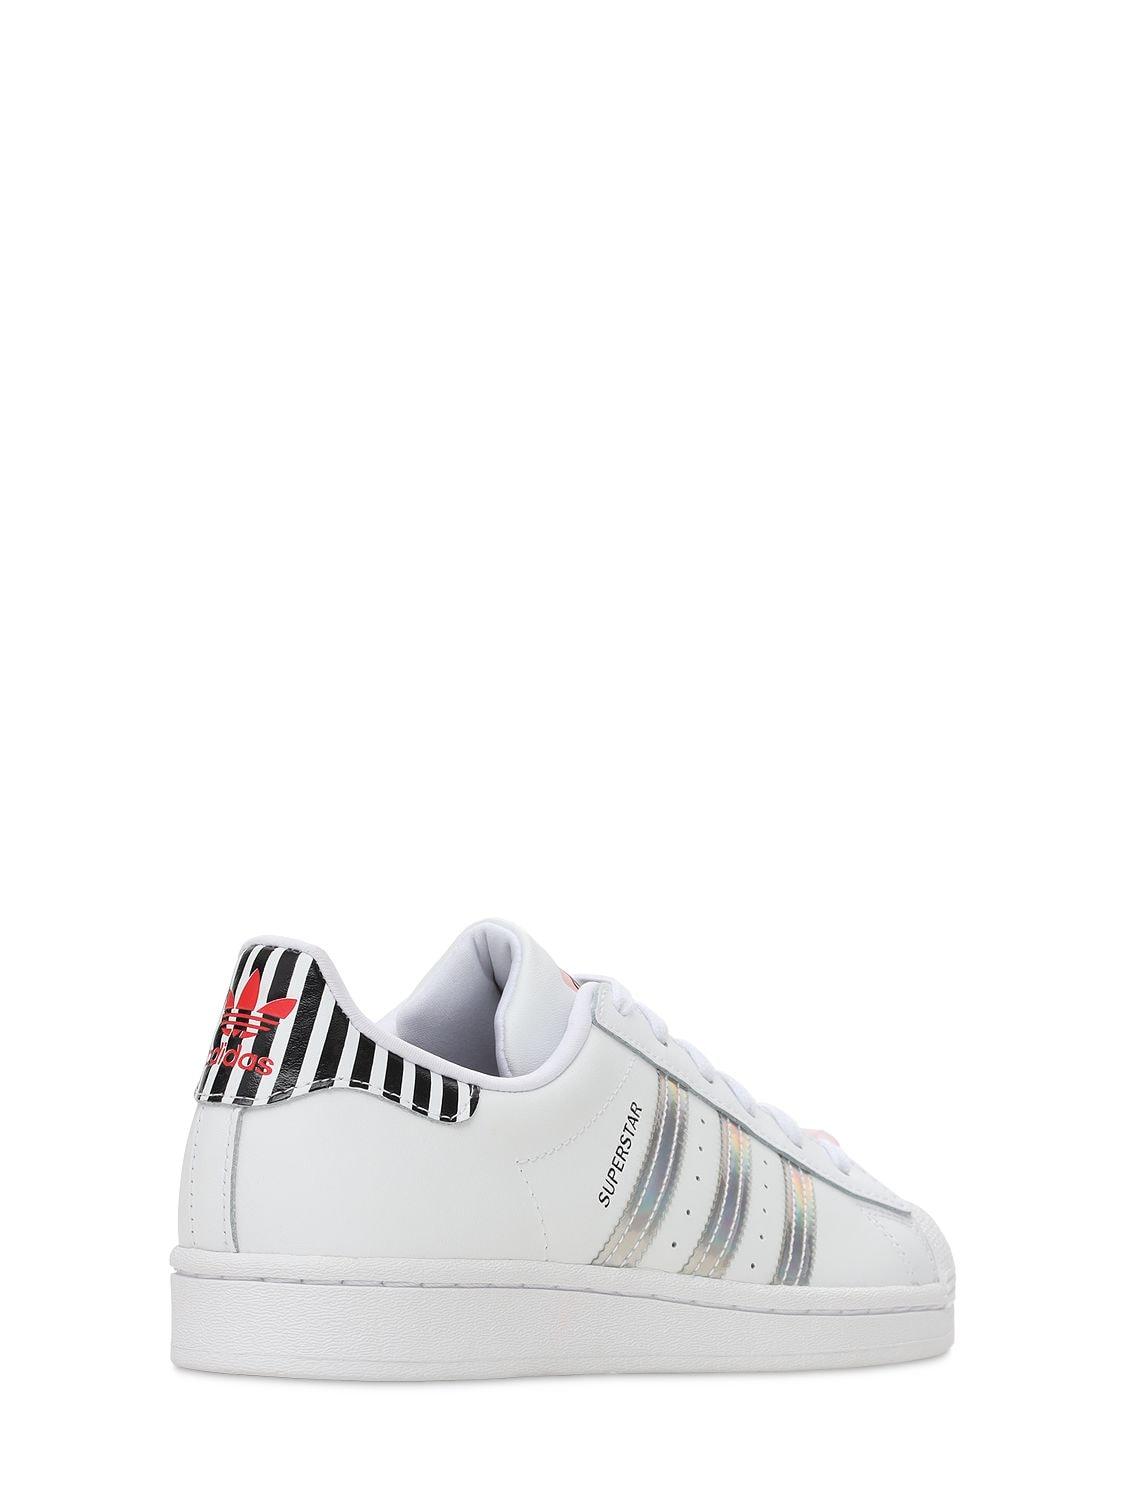 adidas Originals Zebra Superstar Bold Sneakers in White | Lyst